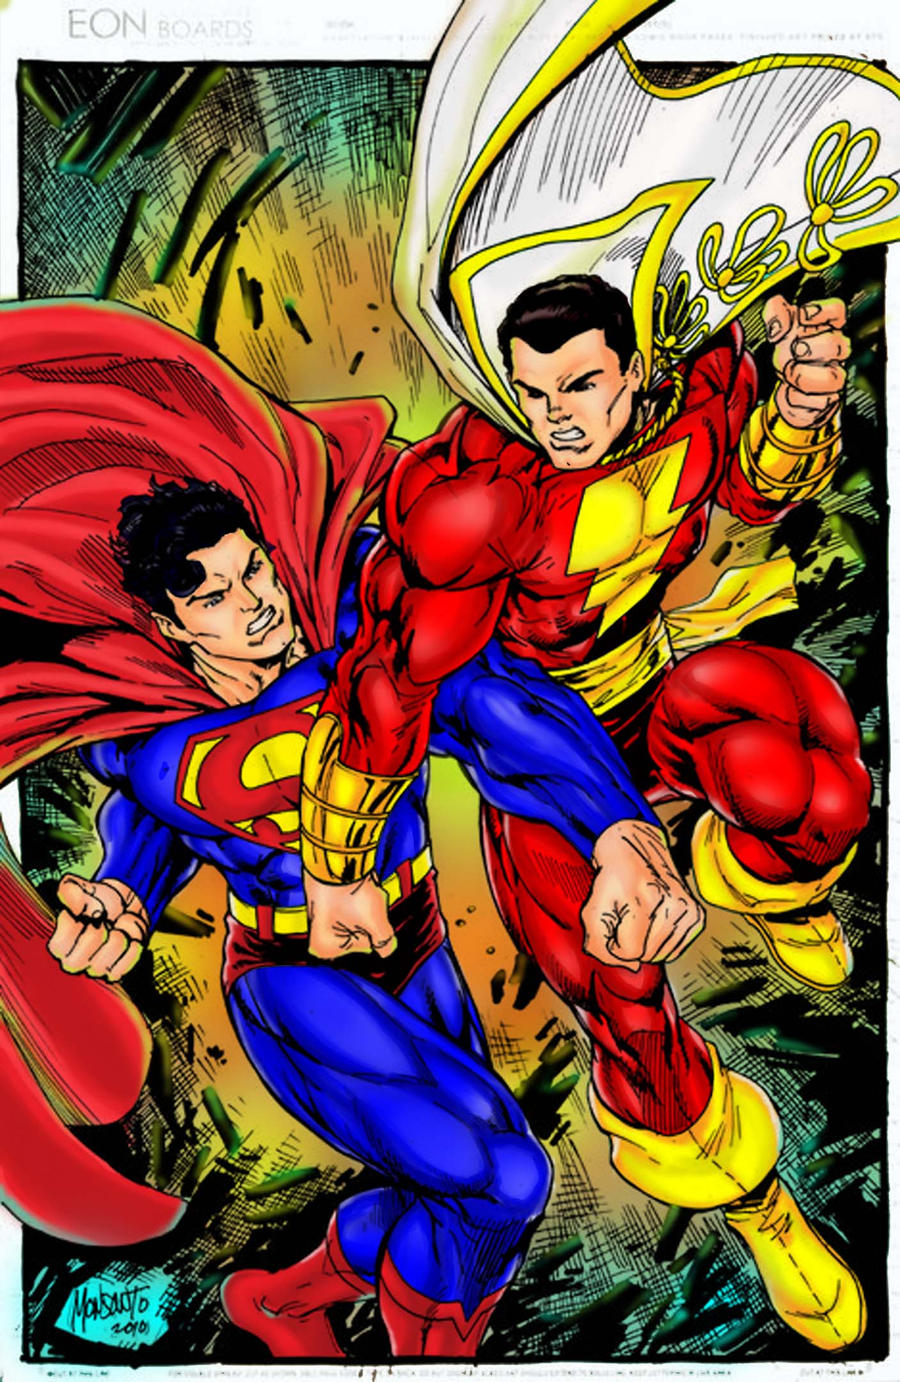 Mitchell Quondam: Superman as a Villain?